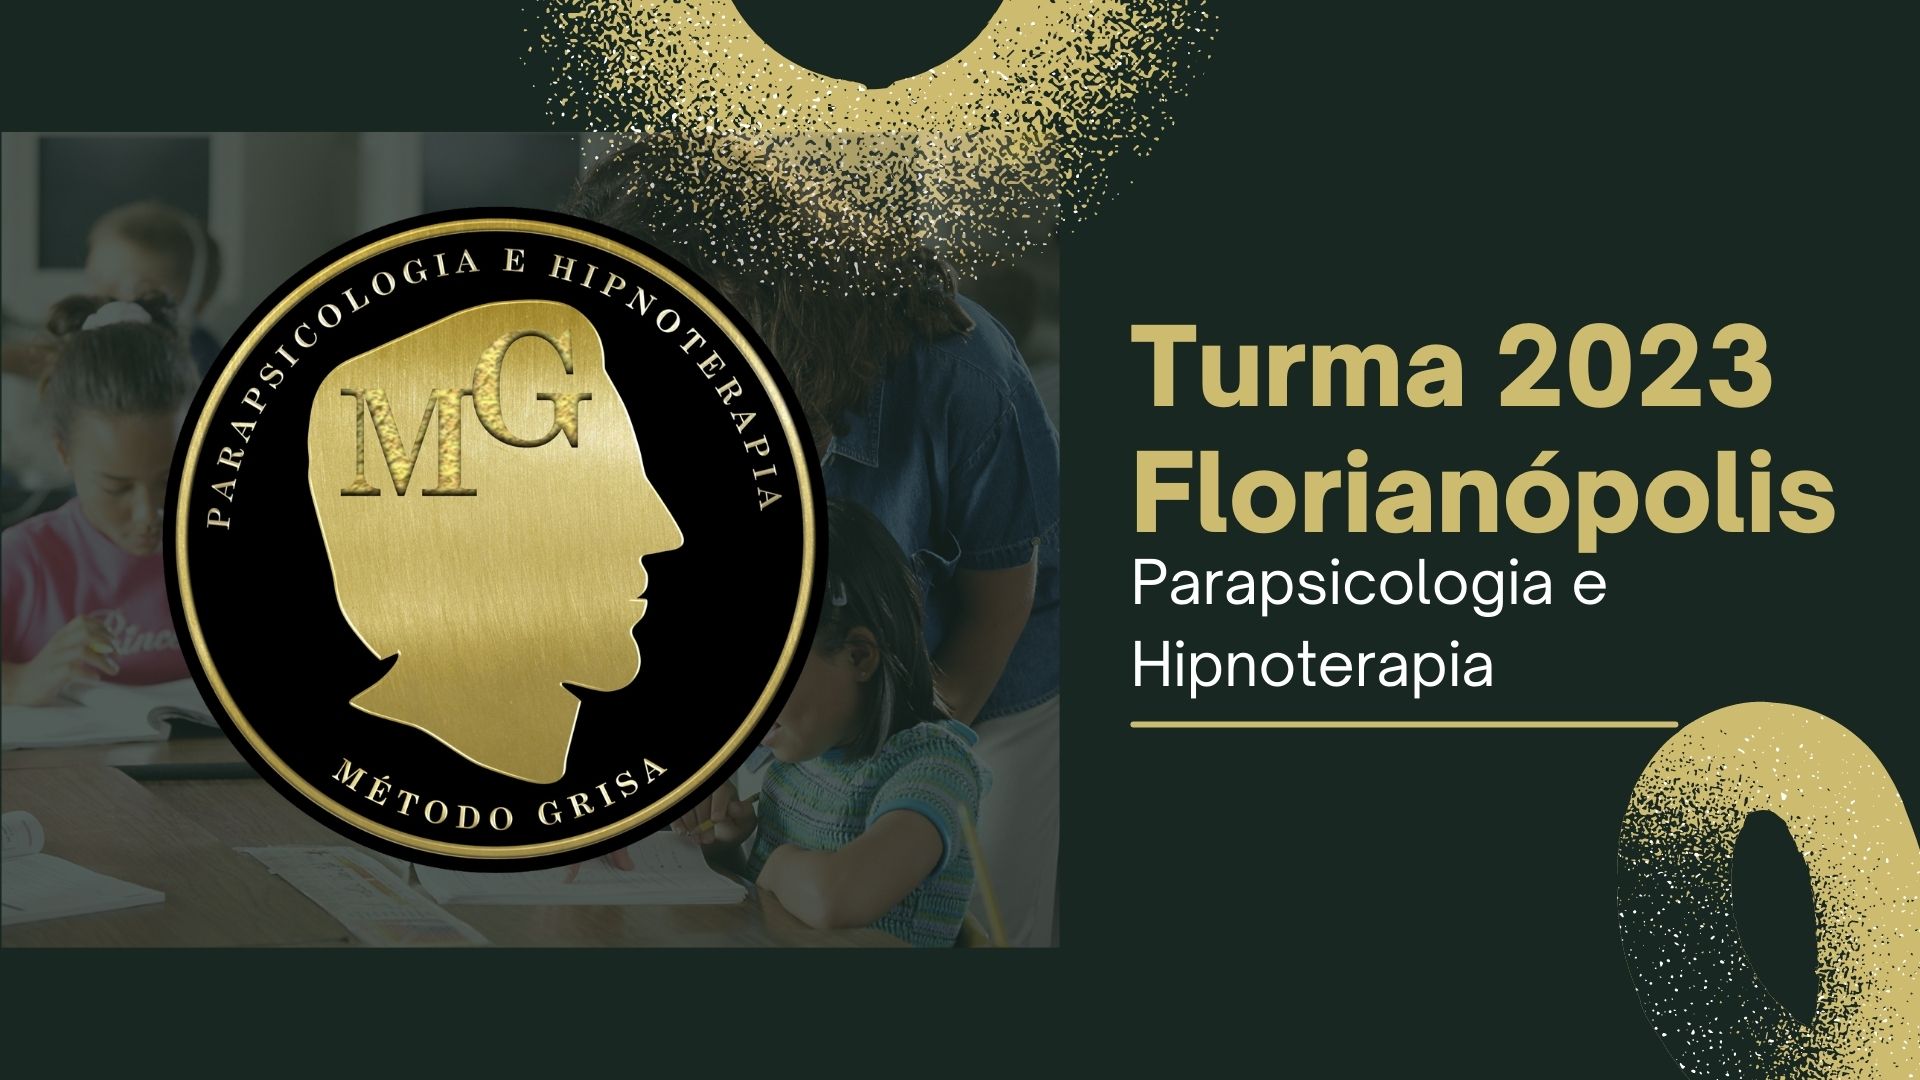 Parapsicologia e Hipnoterapia Turma 2023 Florianópolis